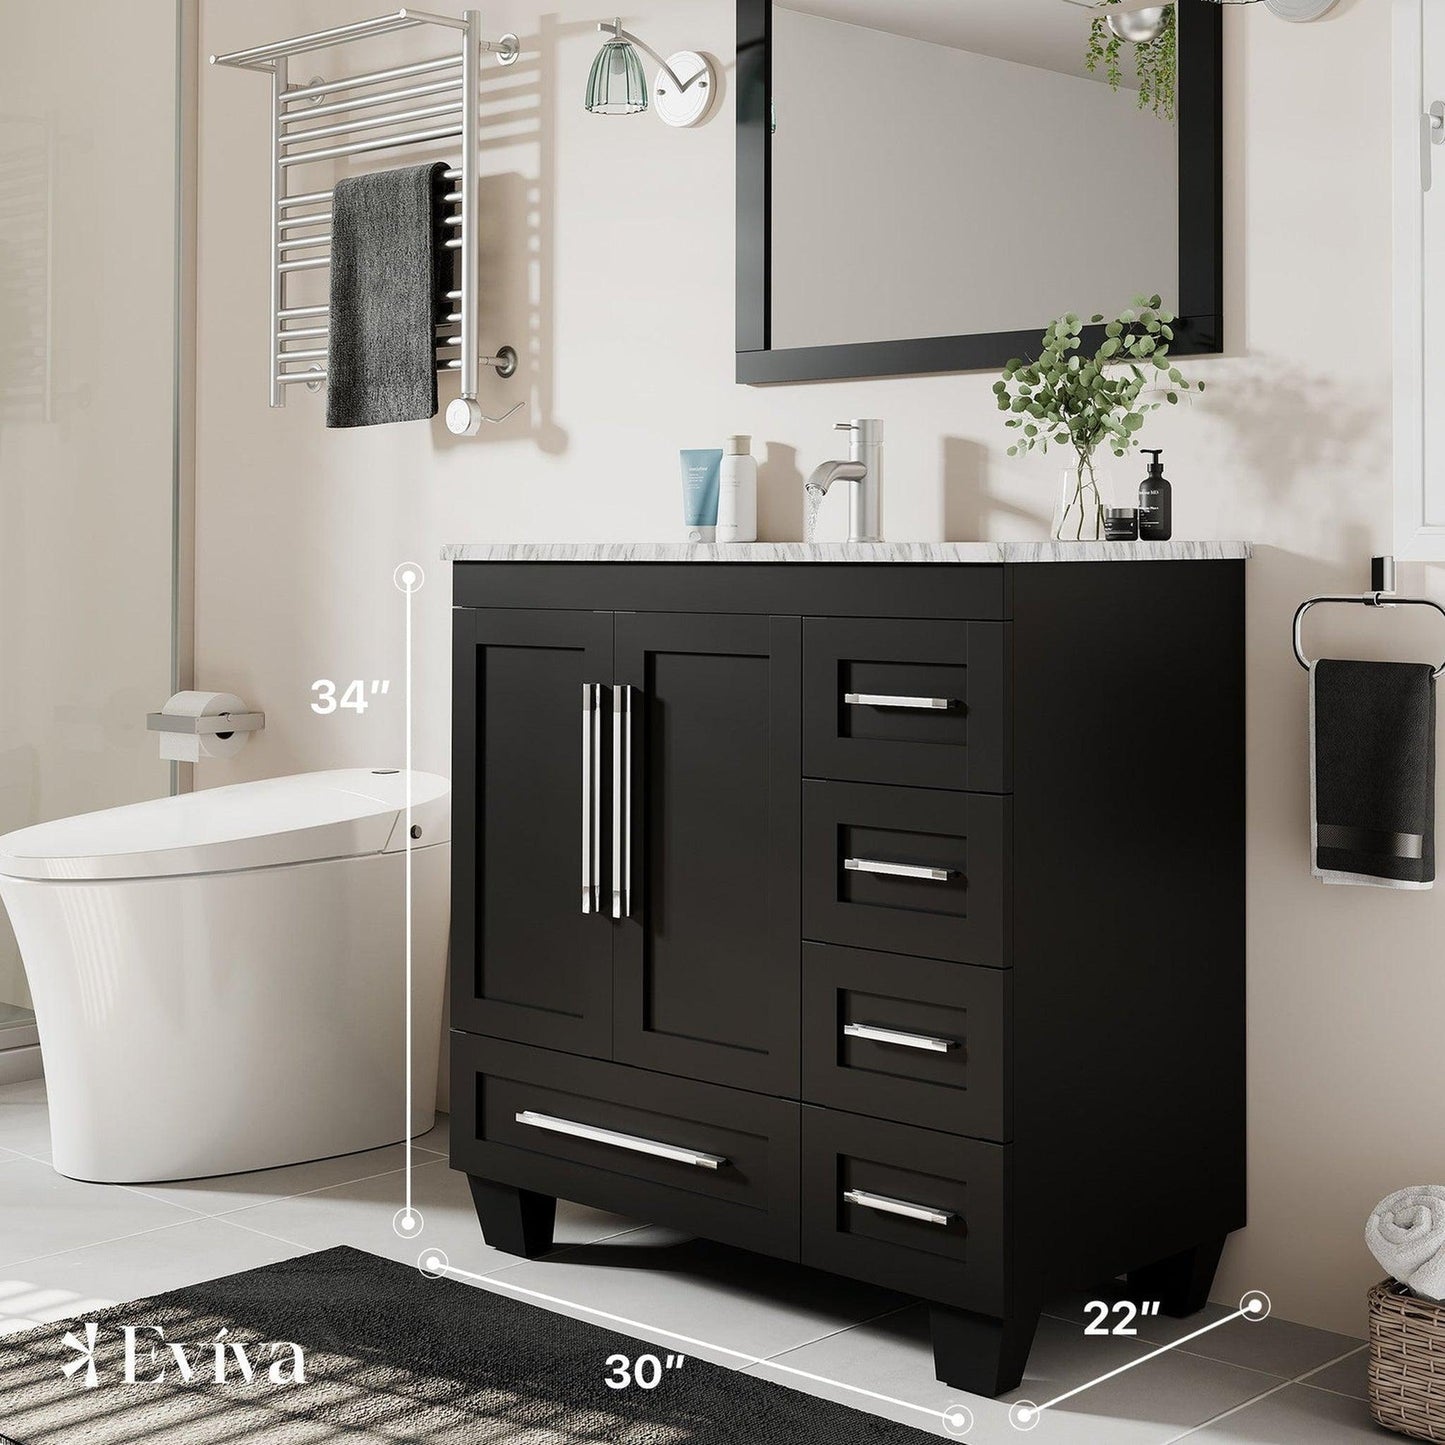 Eviva Loon 30" x 34" Espresso Freestanding Bathroom Vanity With Carrara Marble Countertop and Undermount Porcelain Sink